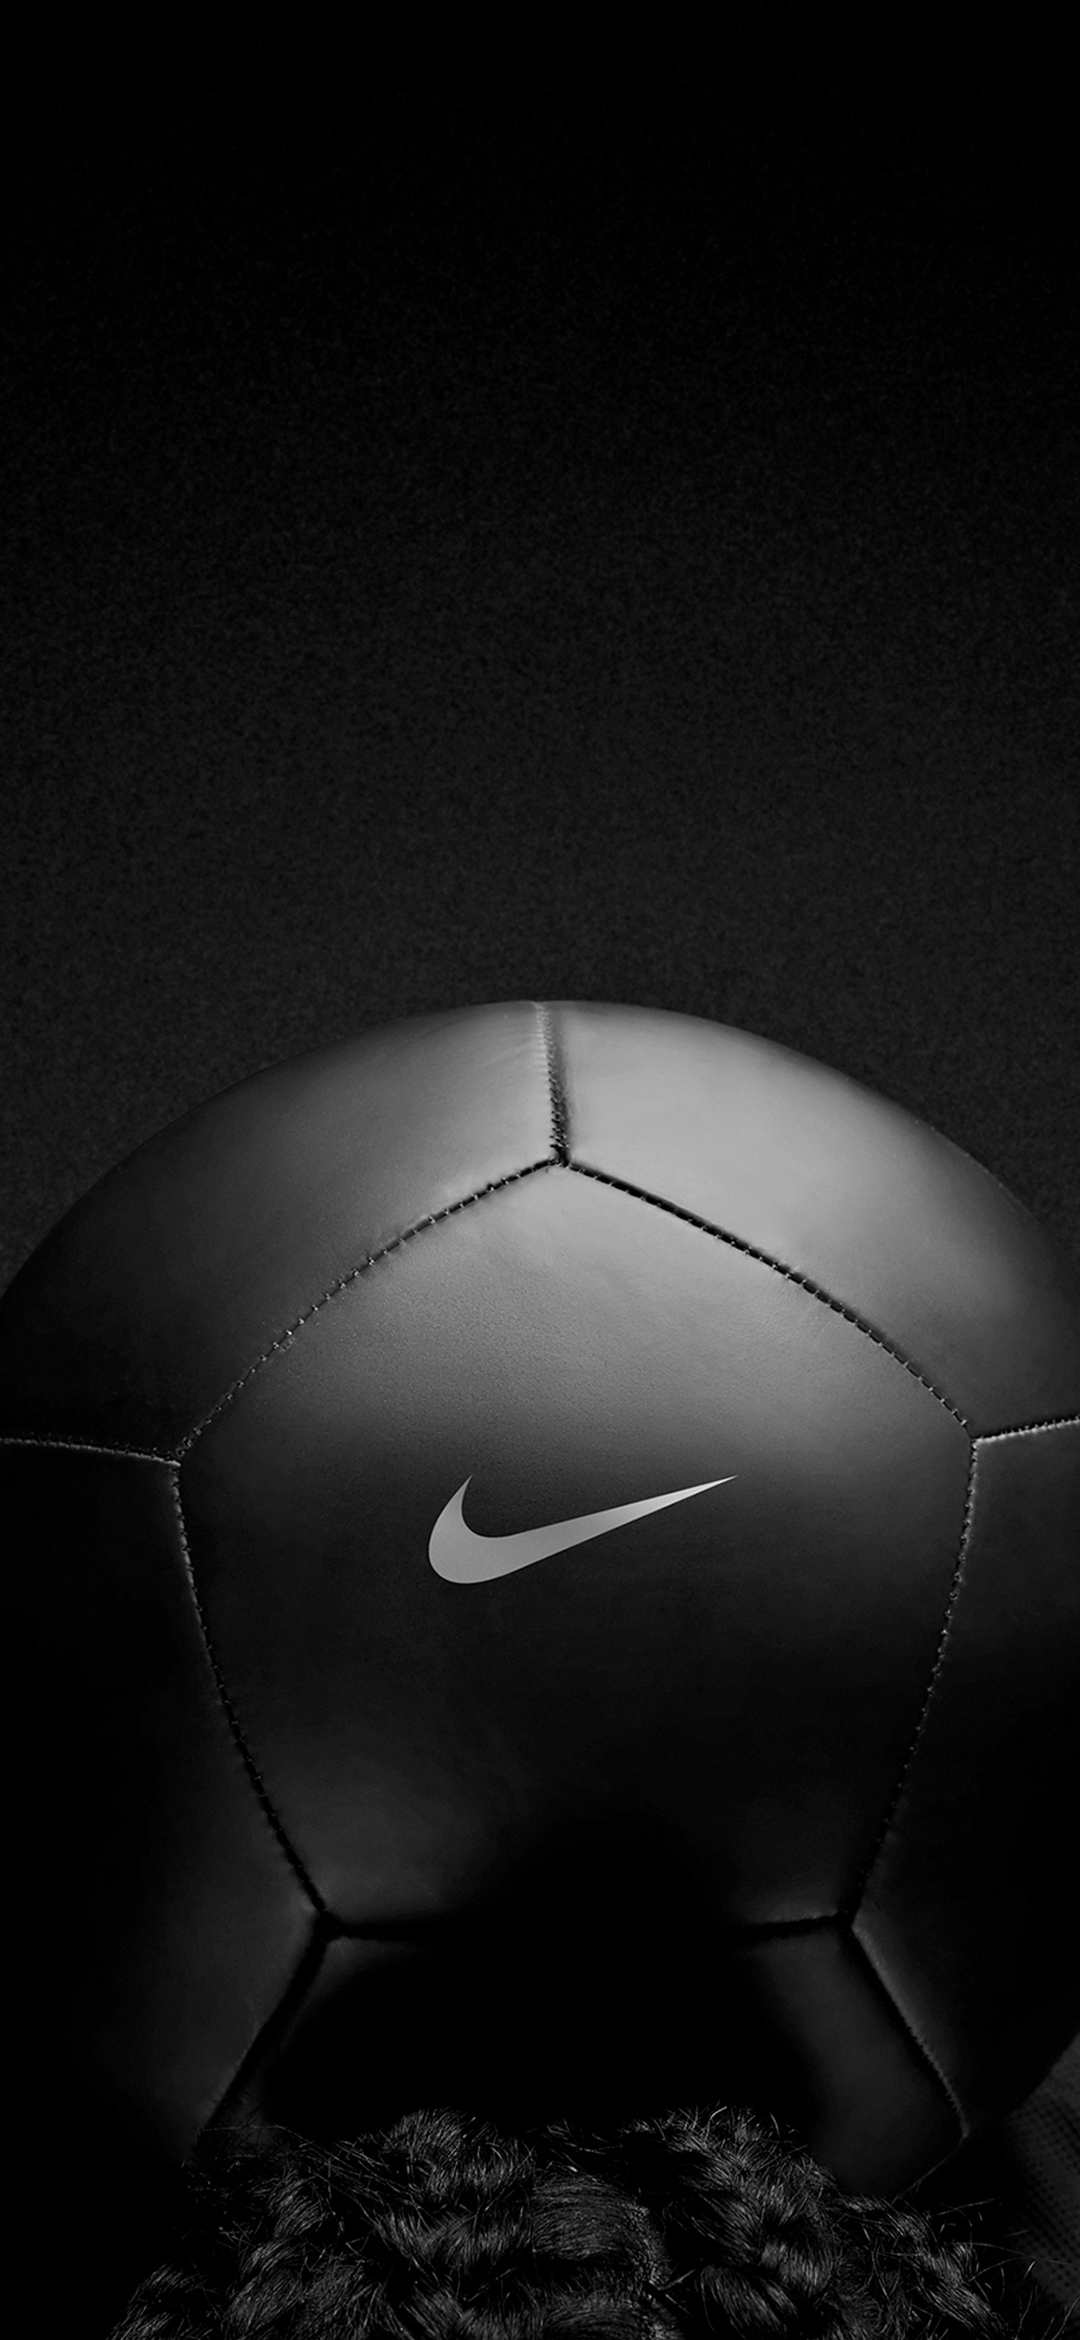 Black Nike Soccer Ball Redmagic 5 Android 壁紙 待ち受け スマラン